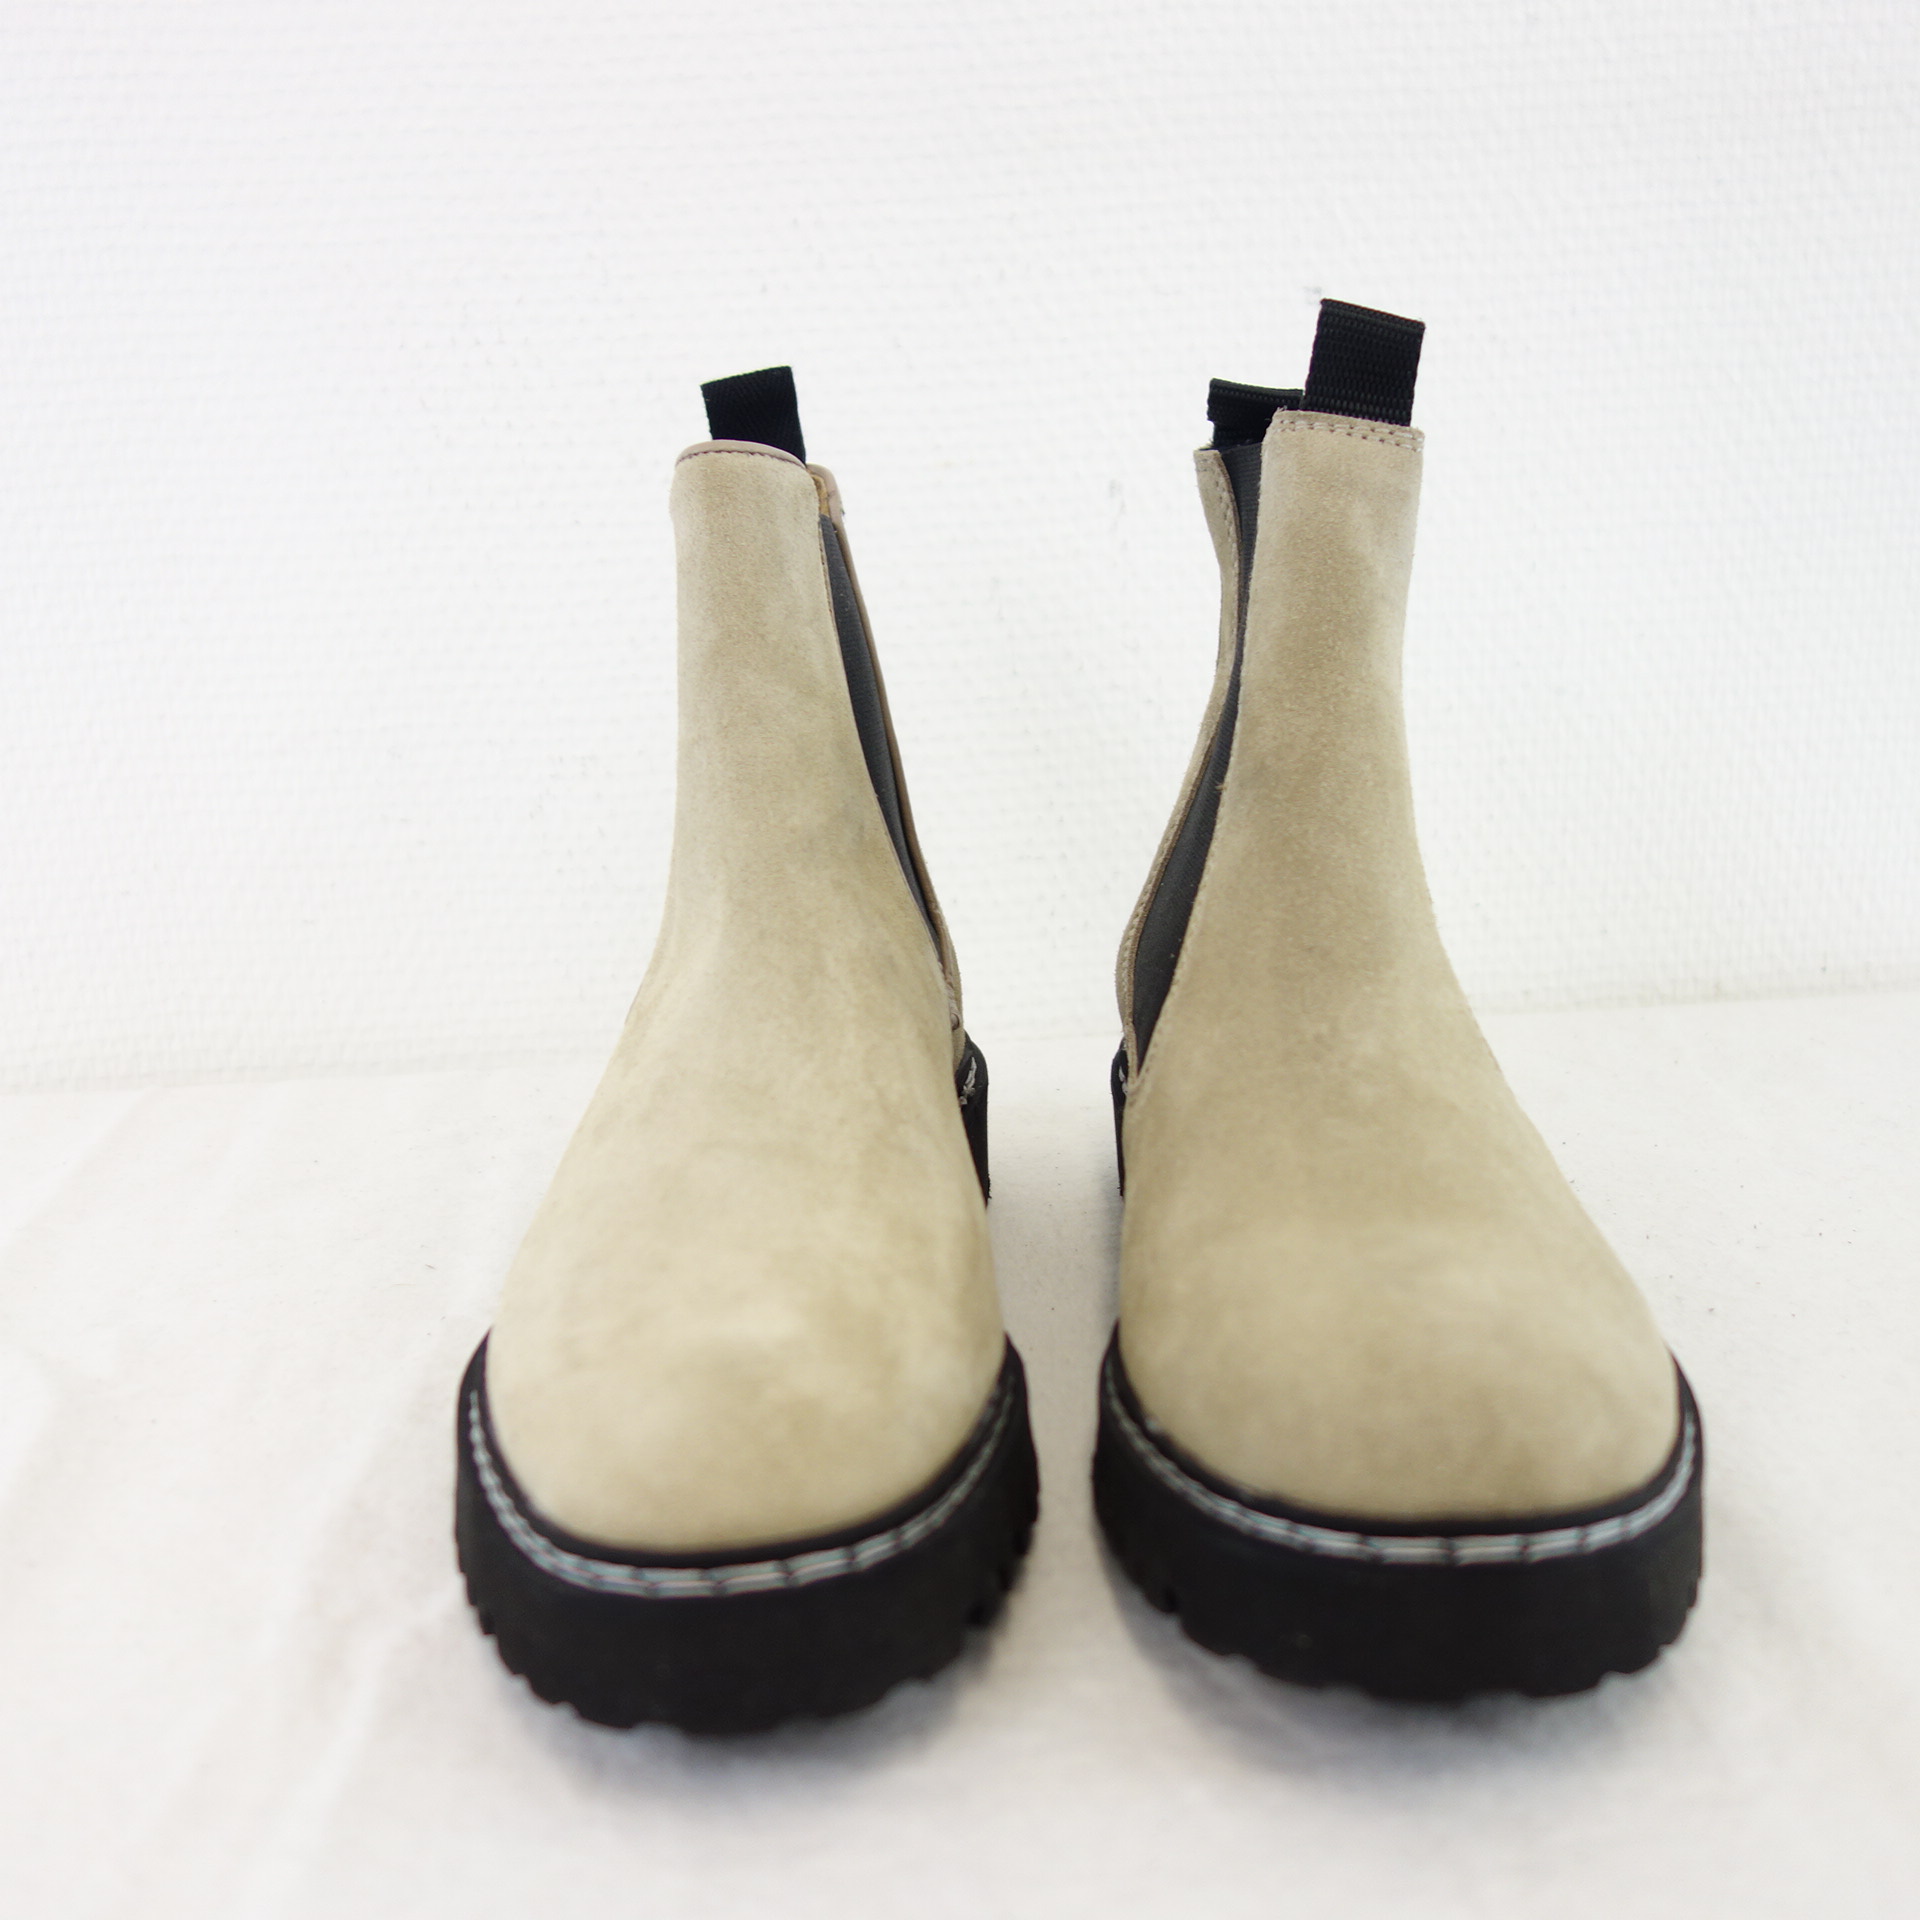 BUKELA Damen Schuhe Chelsea Boots Stiefeletten Stiefel Wildleder Beige Gr 37